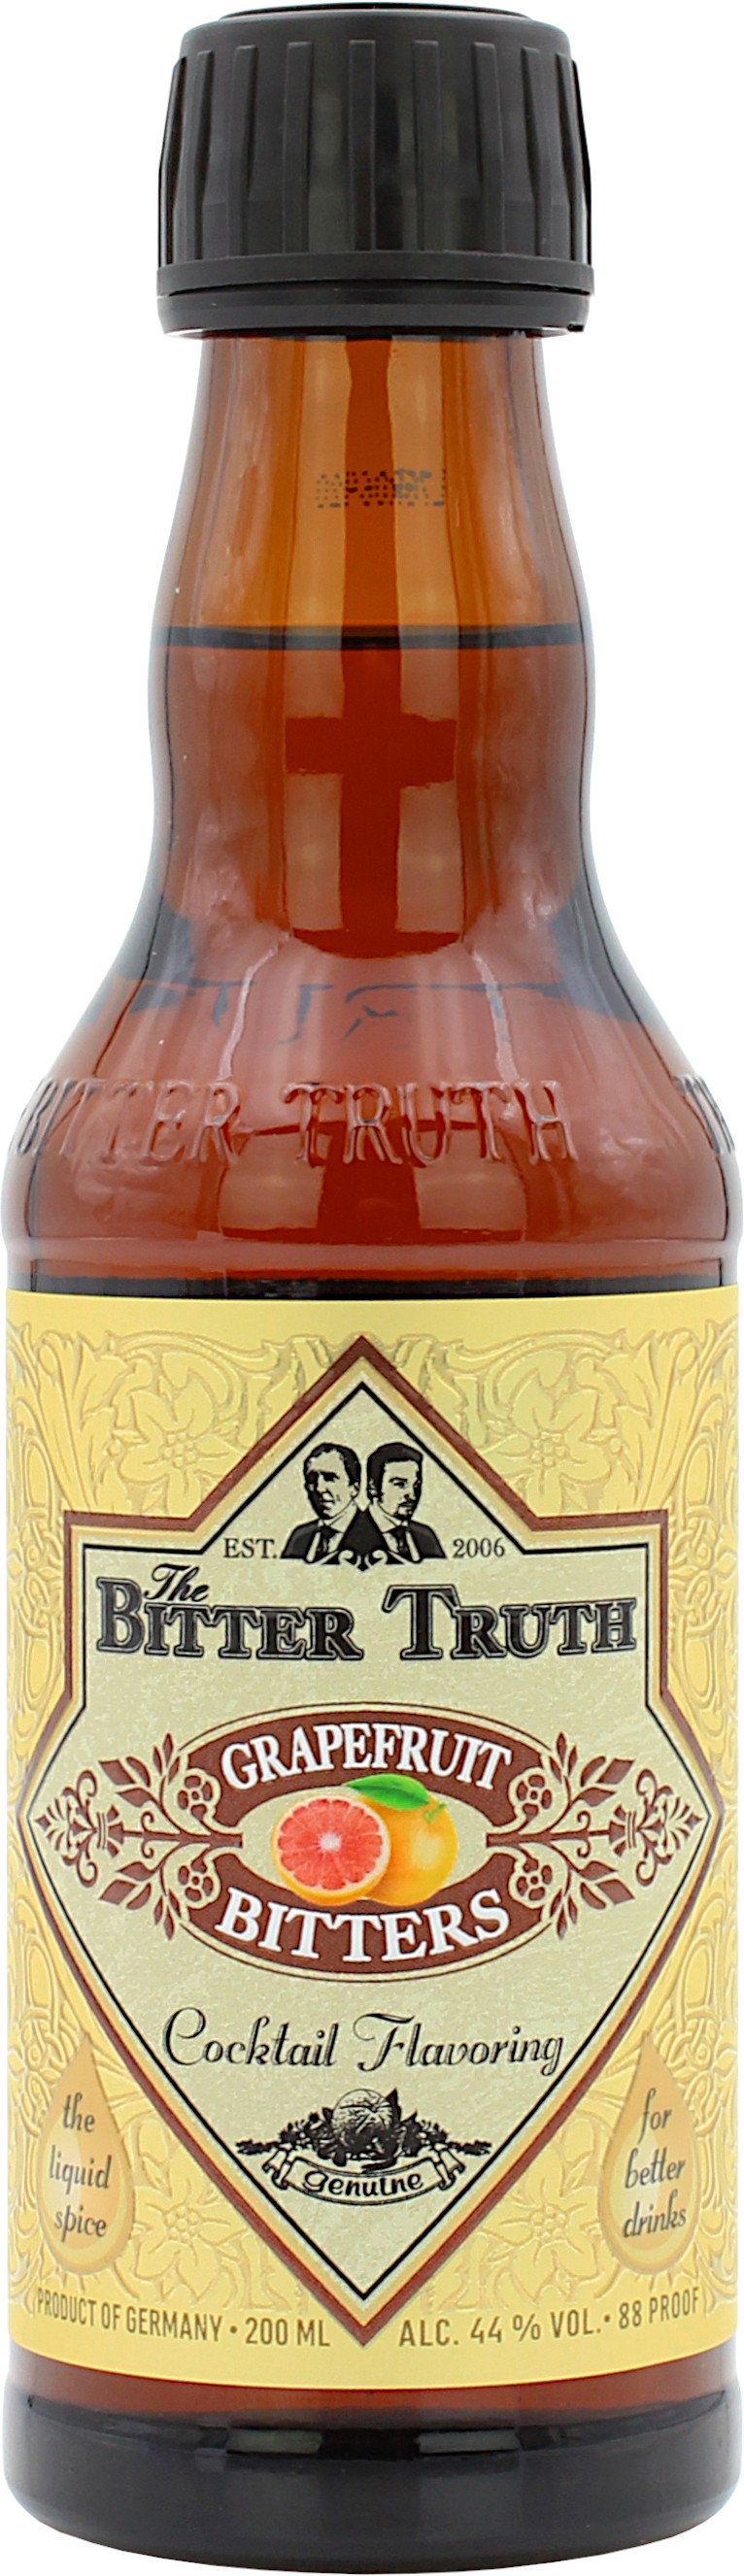 The Bitter Truth Grapefruit Bitters 44.0% 0,2l